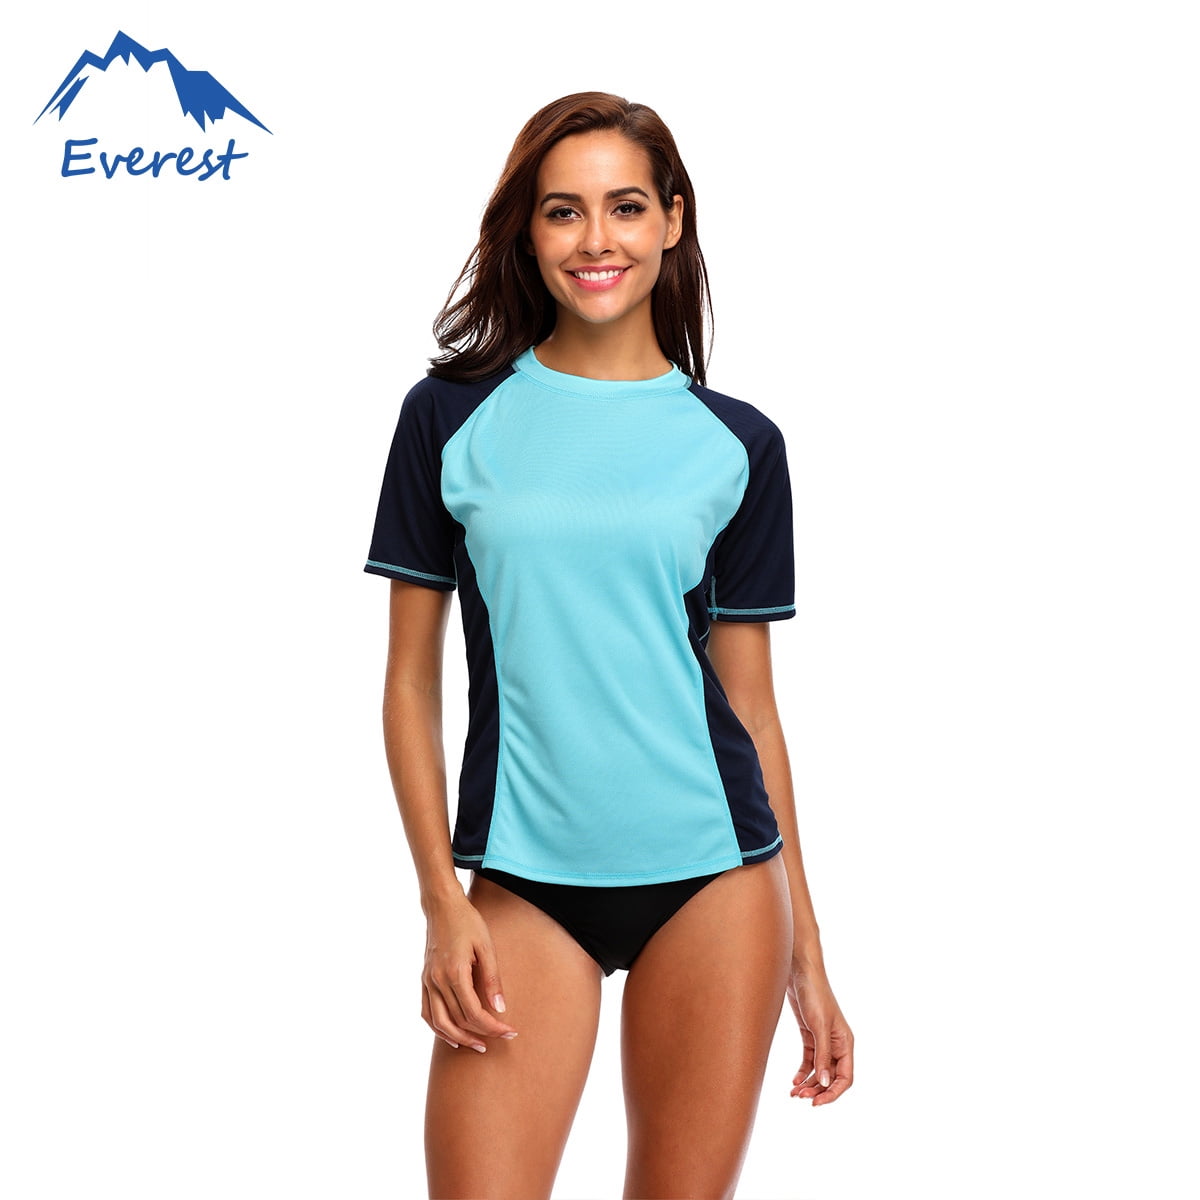 FeelGlad Plus Size Short Sleeve Swimming Shirt Swimwear Top Women's Swim Shirt Swim Tee Rashguard Top, Blue - Walmart.com